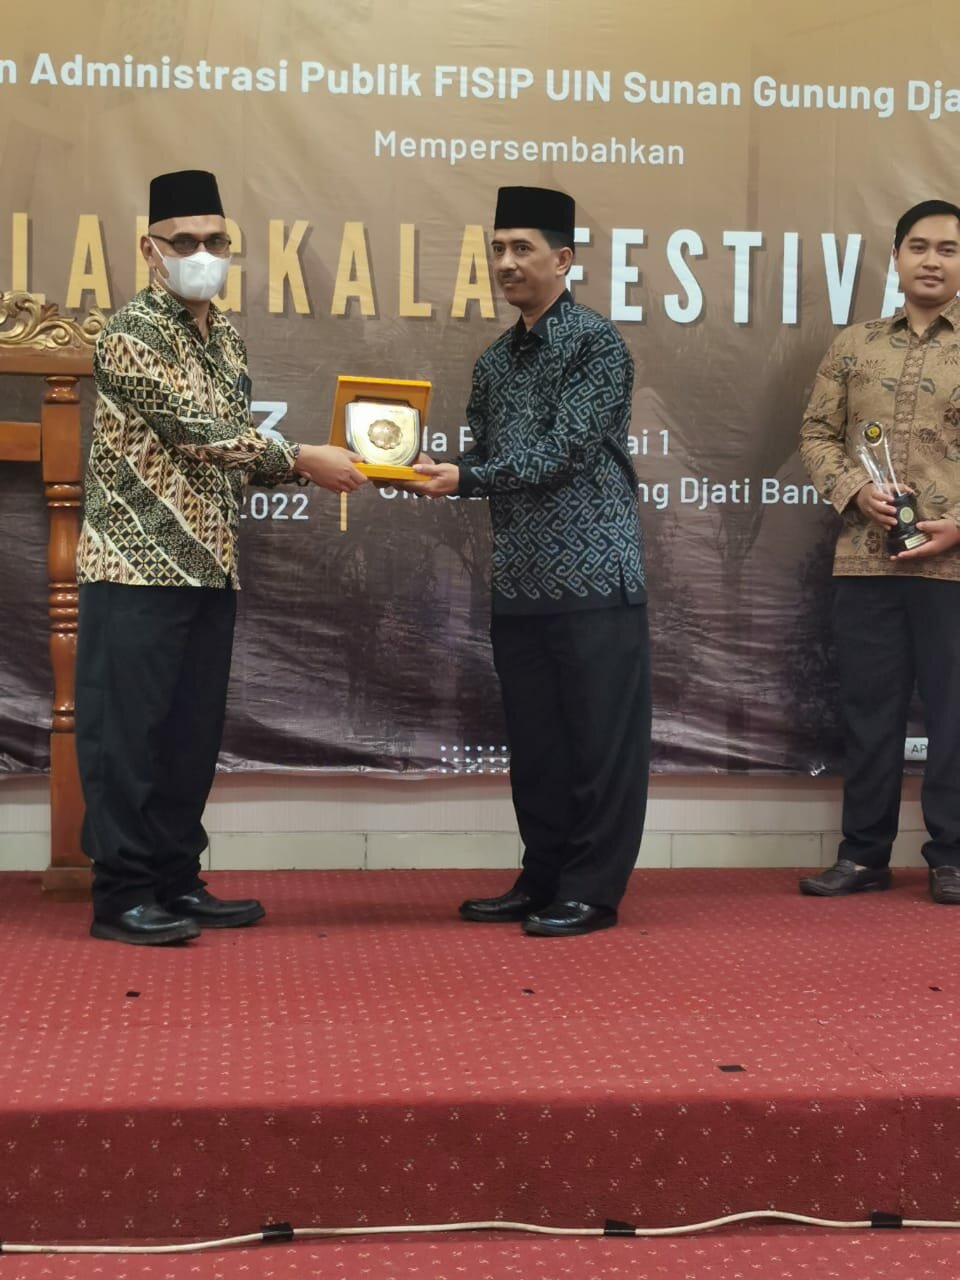 Selamat atas diraihnya Penghargaan dari UIN Bandung